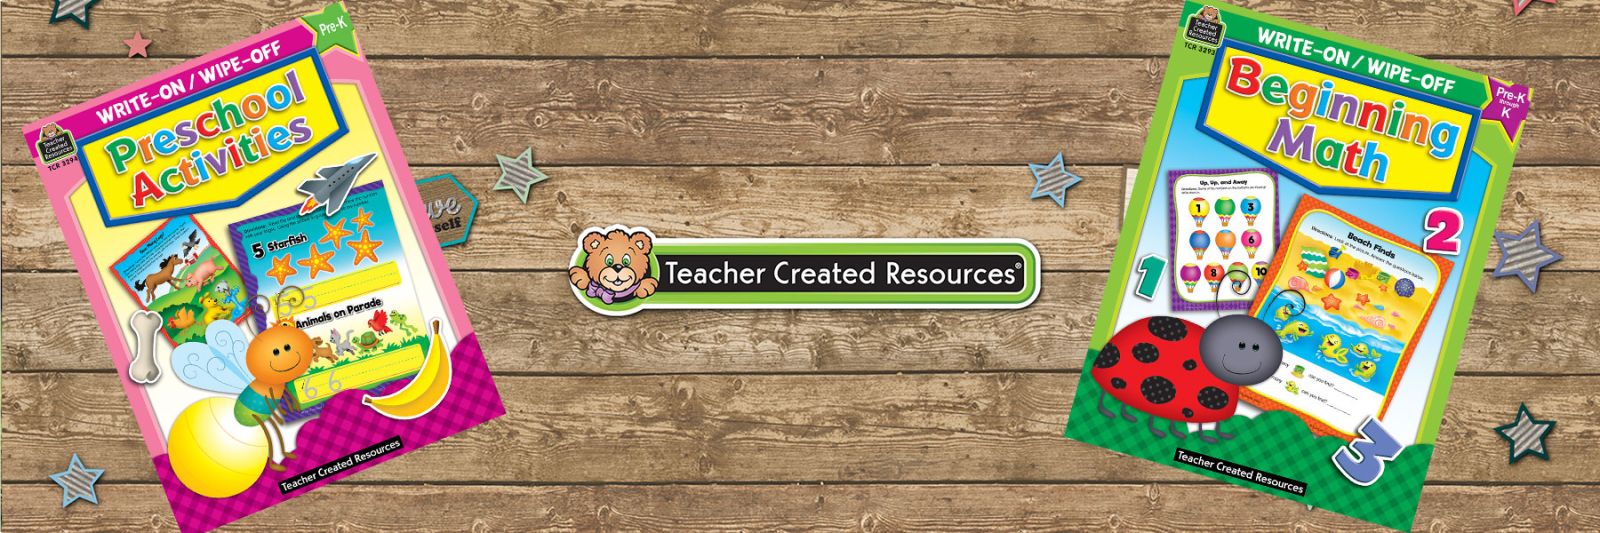 Teacher Created Resources Banner